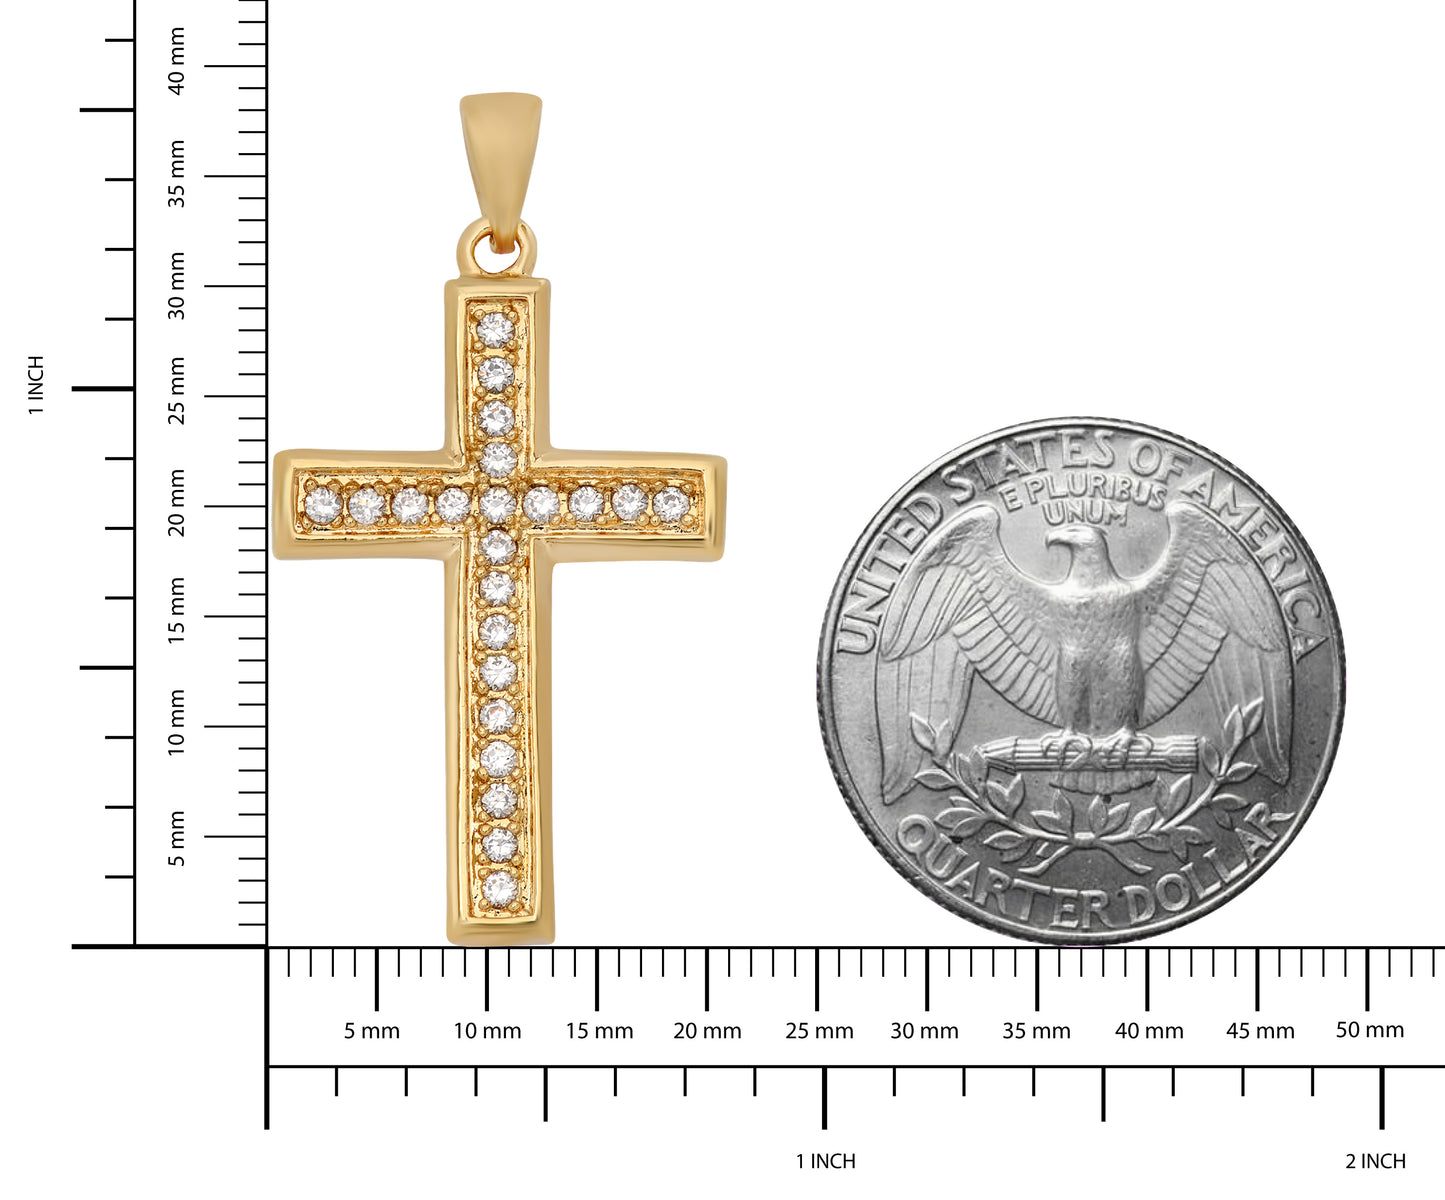 Gold Plated Cross Pendant w/Round Brilliant Cut CZs + Jewelry Polishing Cloth (SKU: GL-CZP474-SET)